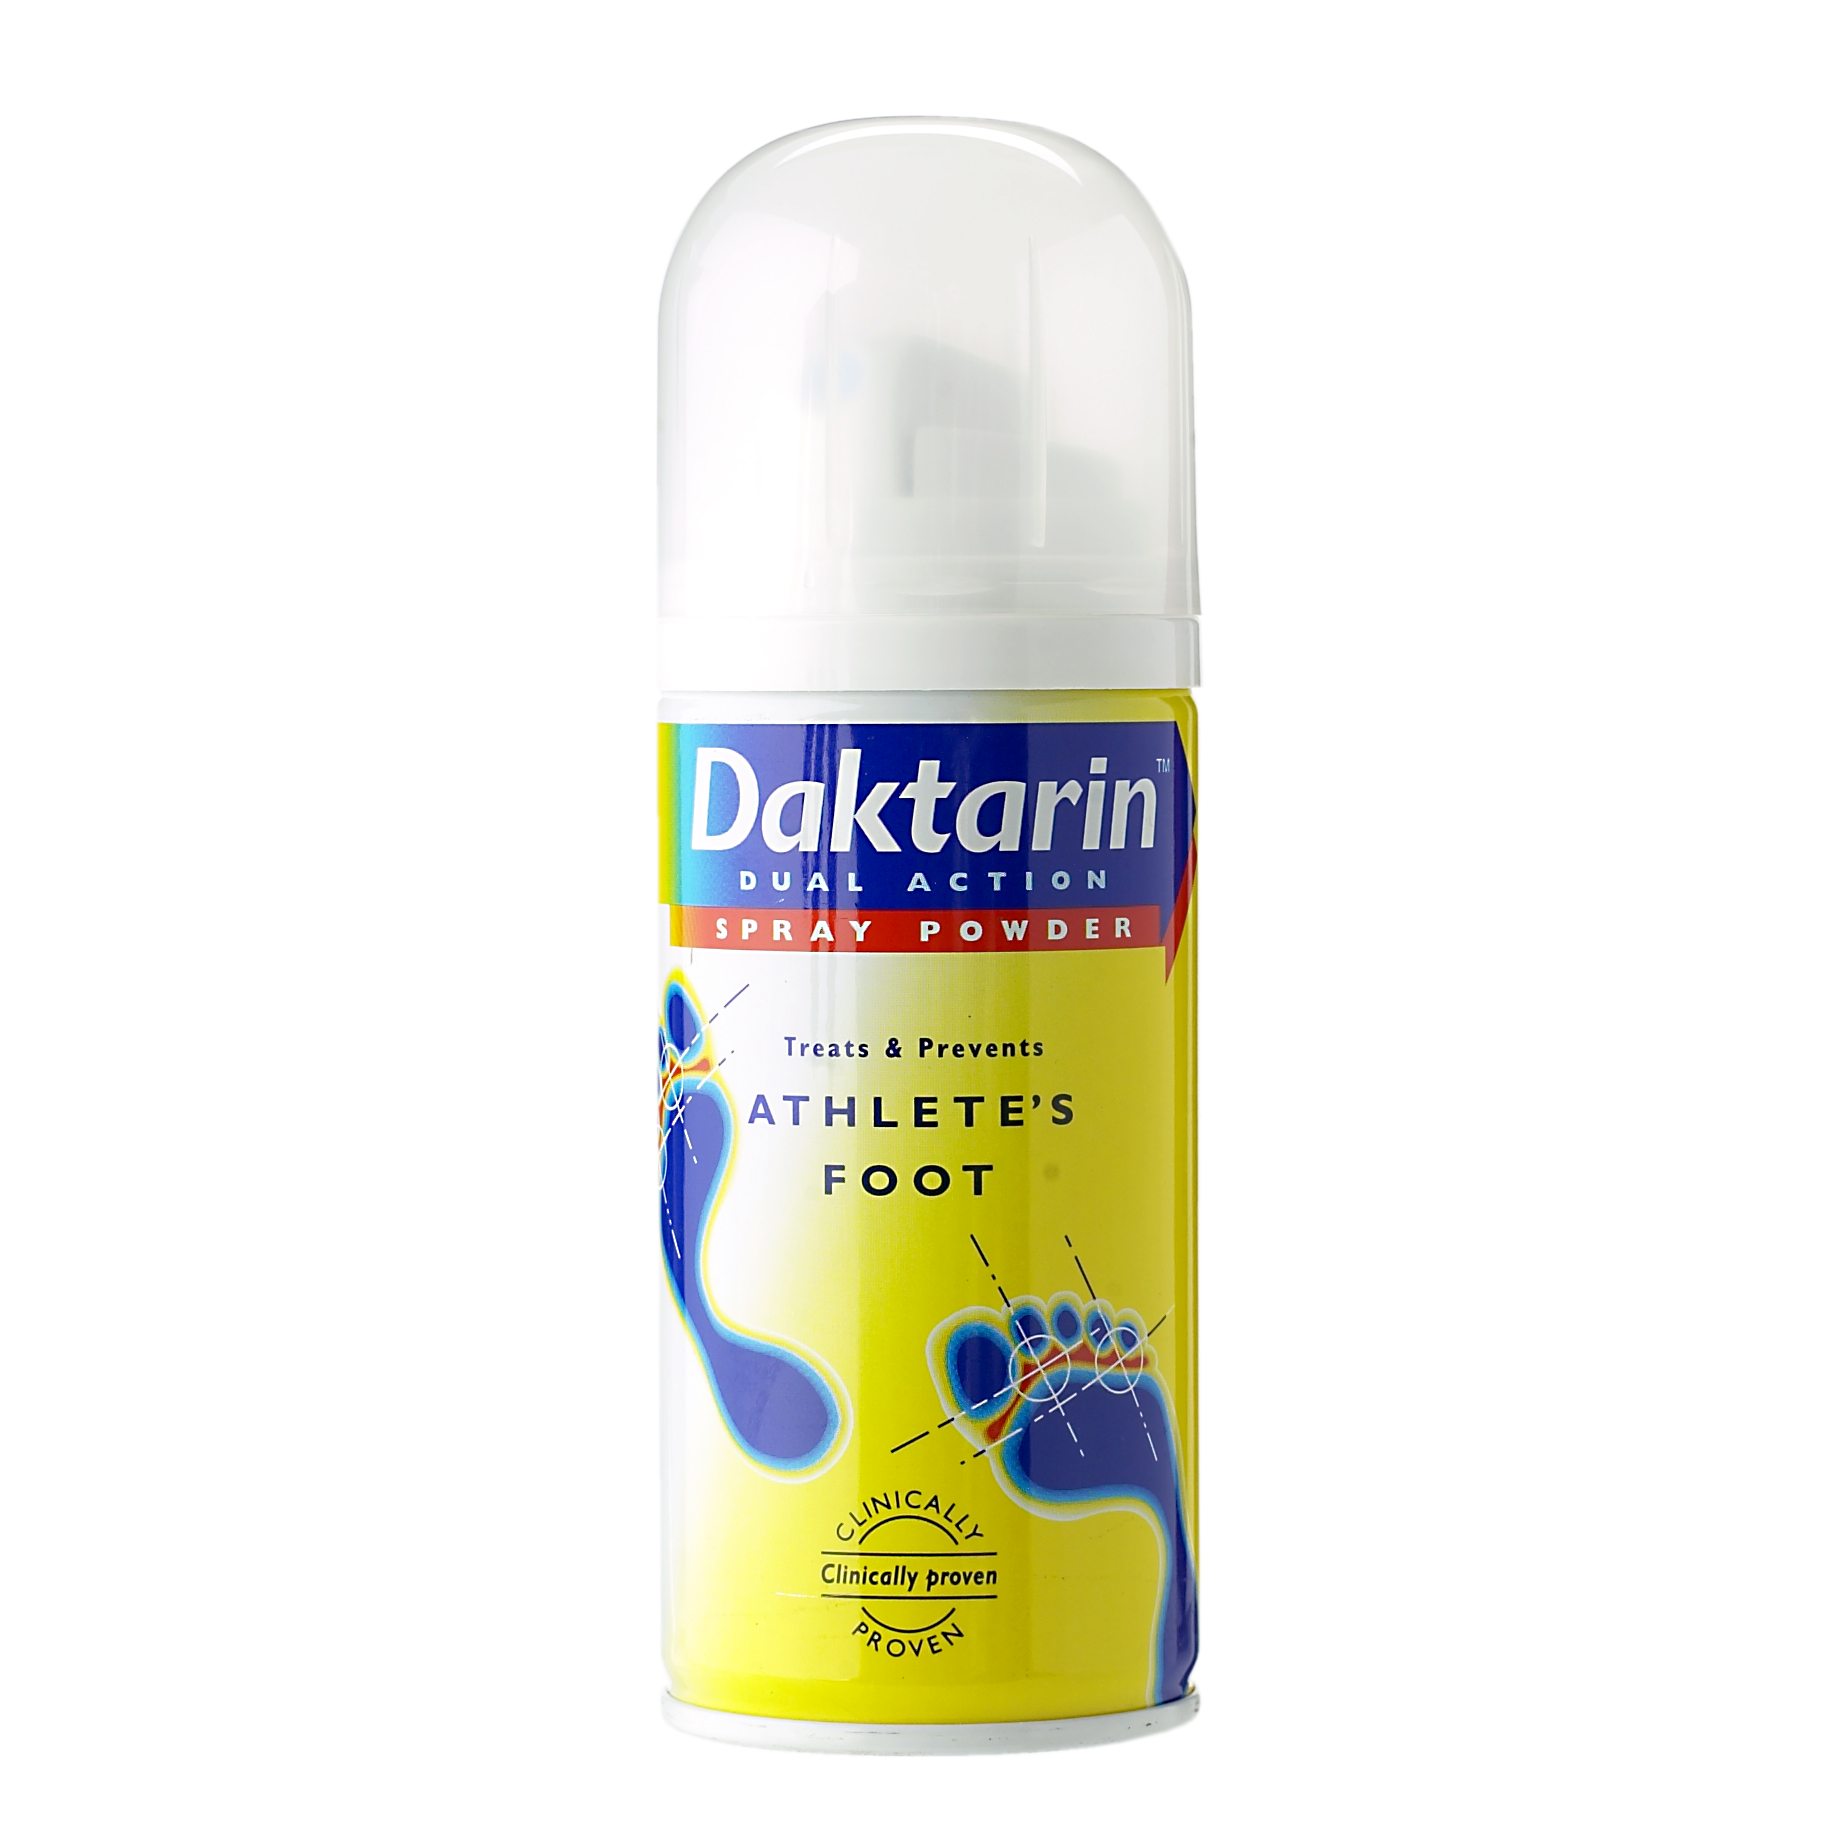 Unbranded Daktarin Dual Action Spray Powder